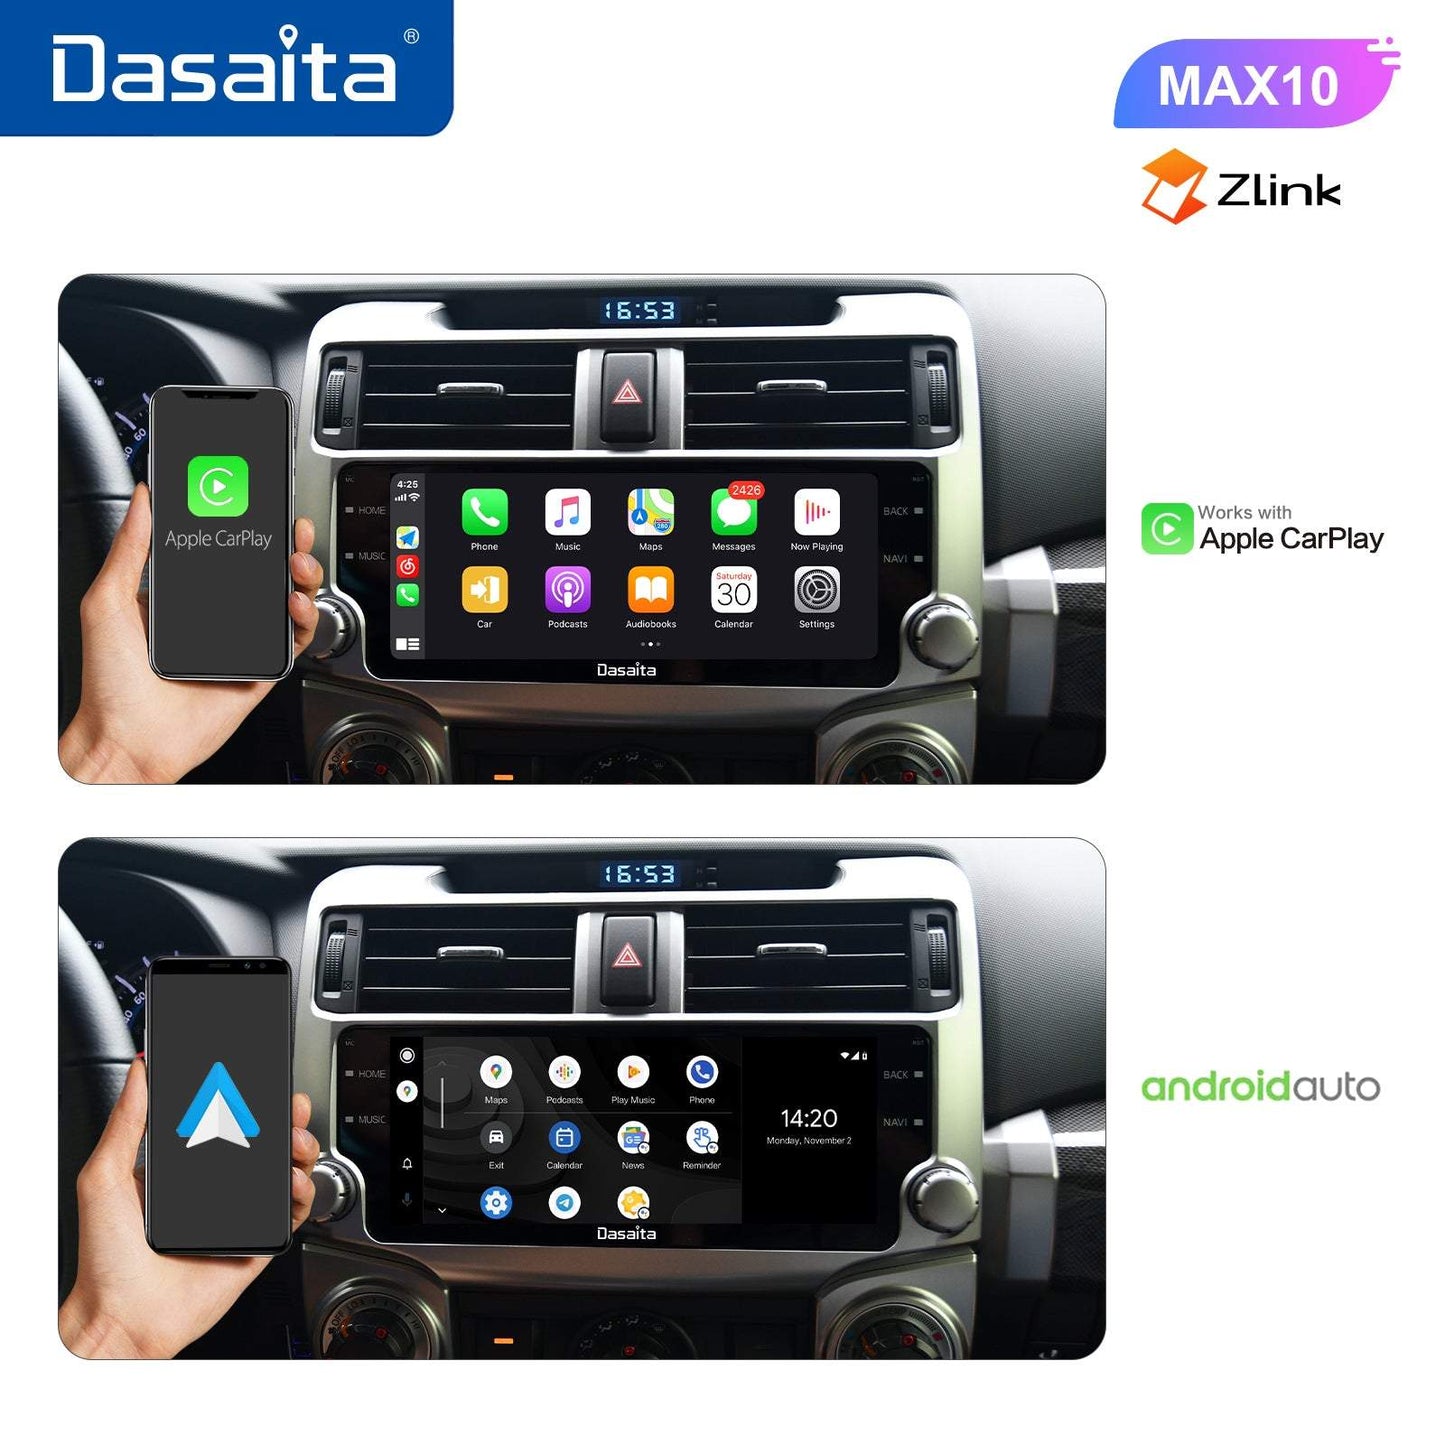 Dasaita MAX10/MAX11 Toyota 4Runner 2014 2015 2016 2017 2018 2019 Car Stereo 10.25 Inch Carplay Android Auto PX6 4G+64G  Android10/Android11 1280*480 DSP AHD Radio